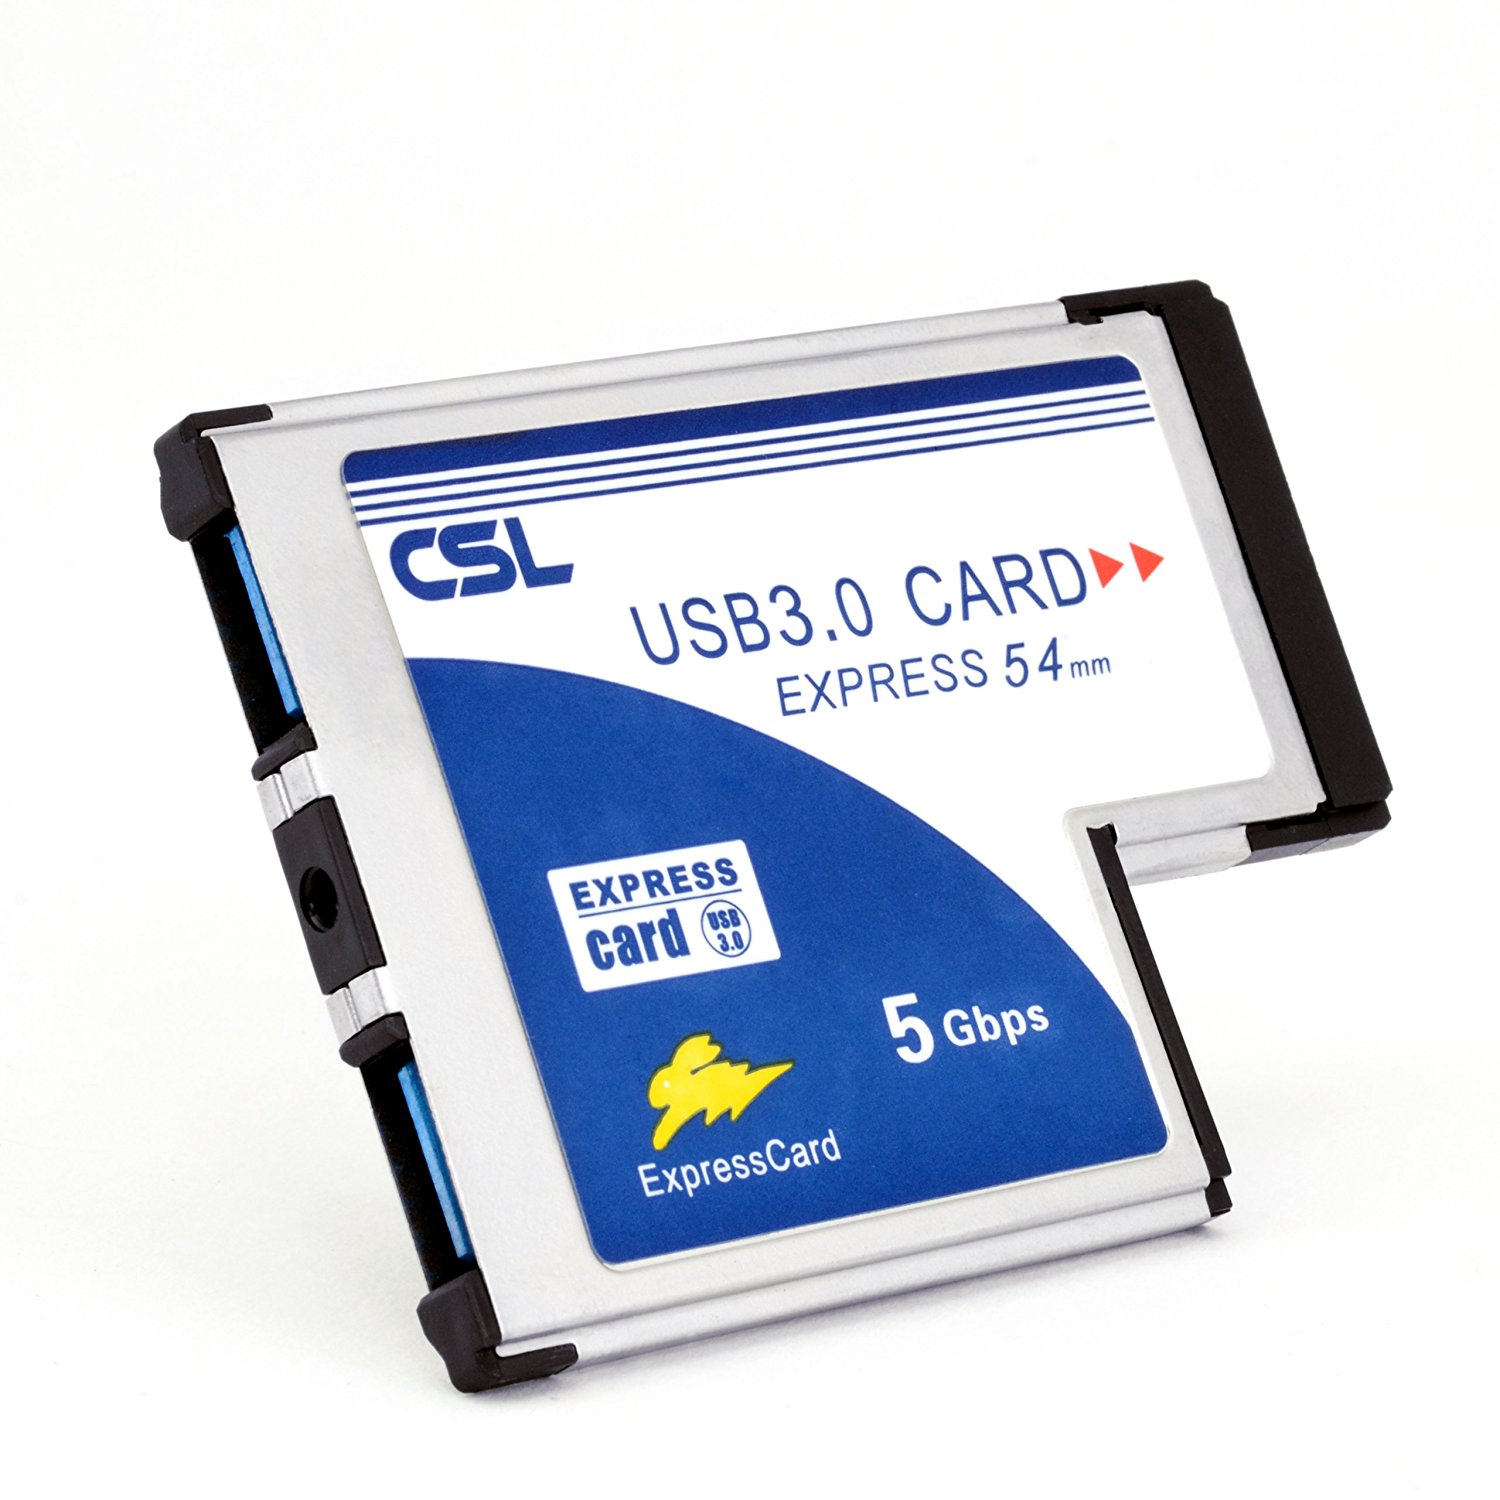 Express USB 3.